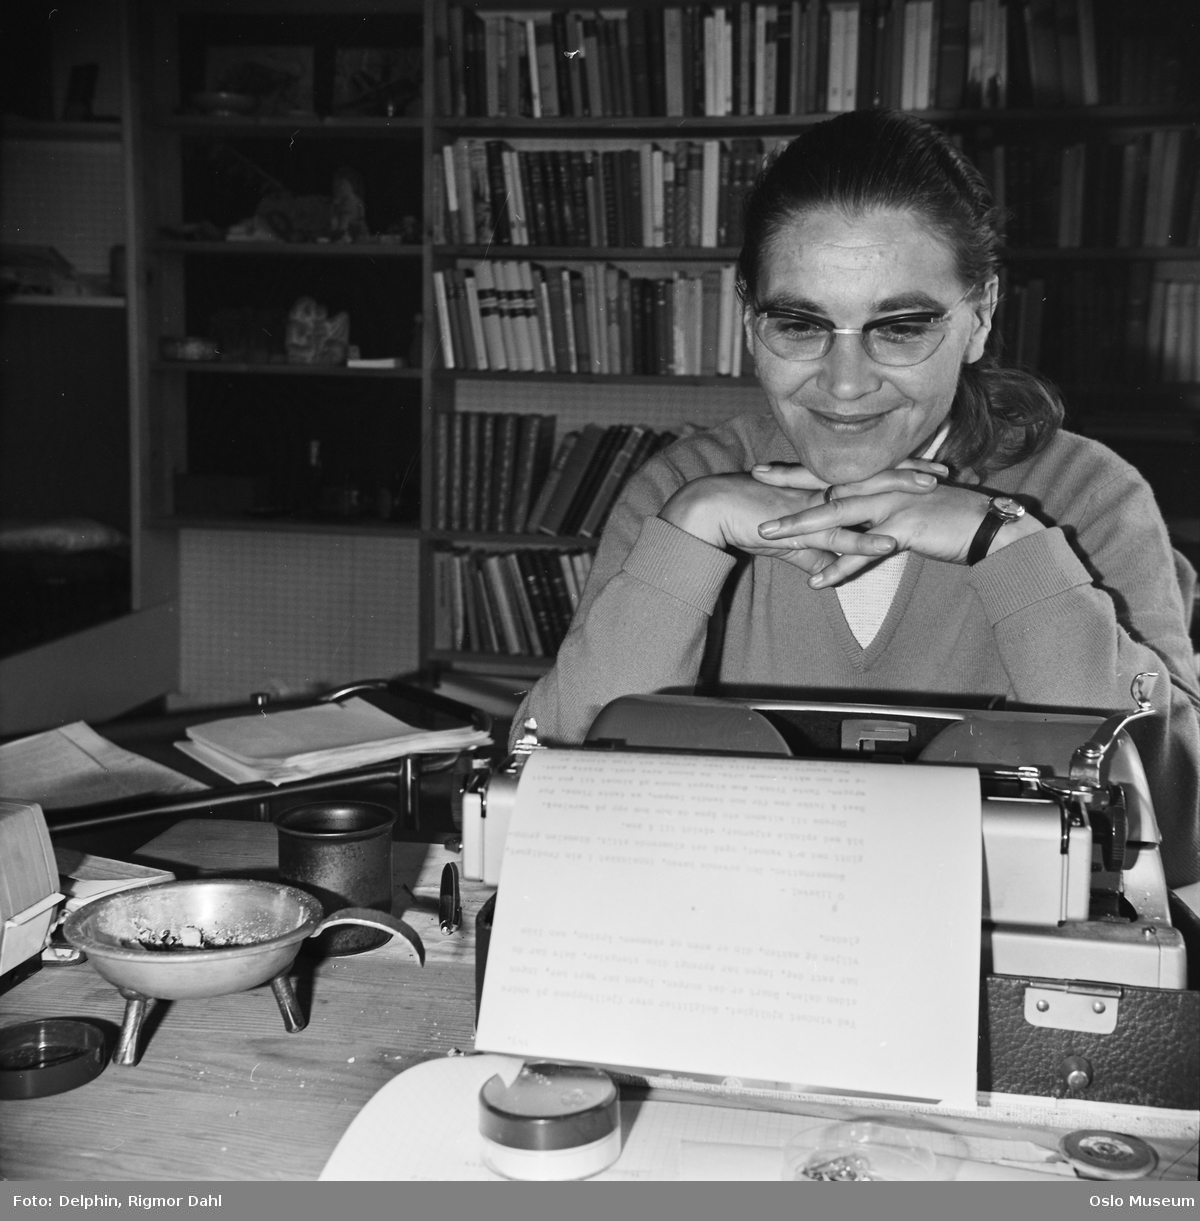 bolighus, interiør, kvinne, forfatter, sittende halvfigur ved skrivebord, skrivemaskin